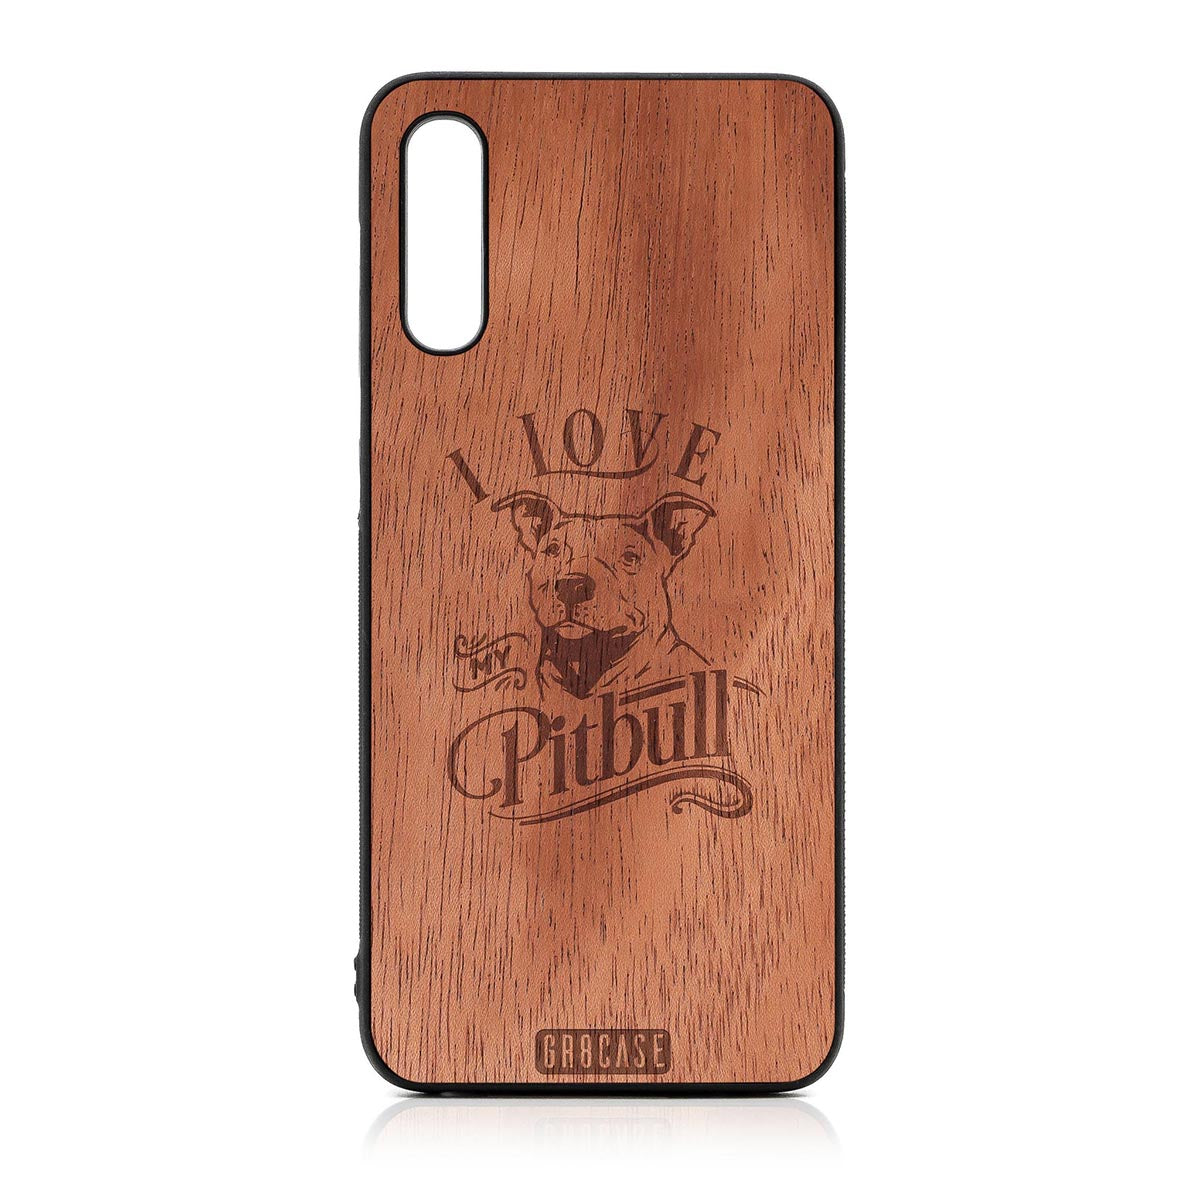 I Love My Pitbull Design Wood Case For Samsung Galaxy A50 by GR8CASE